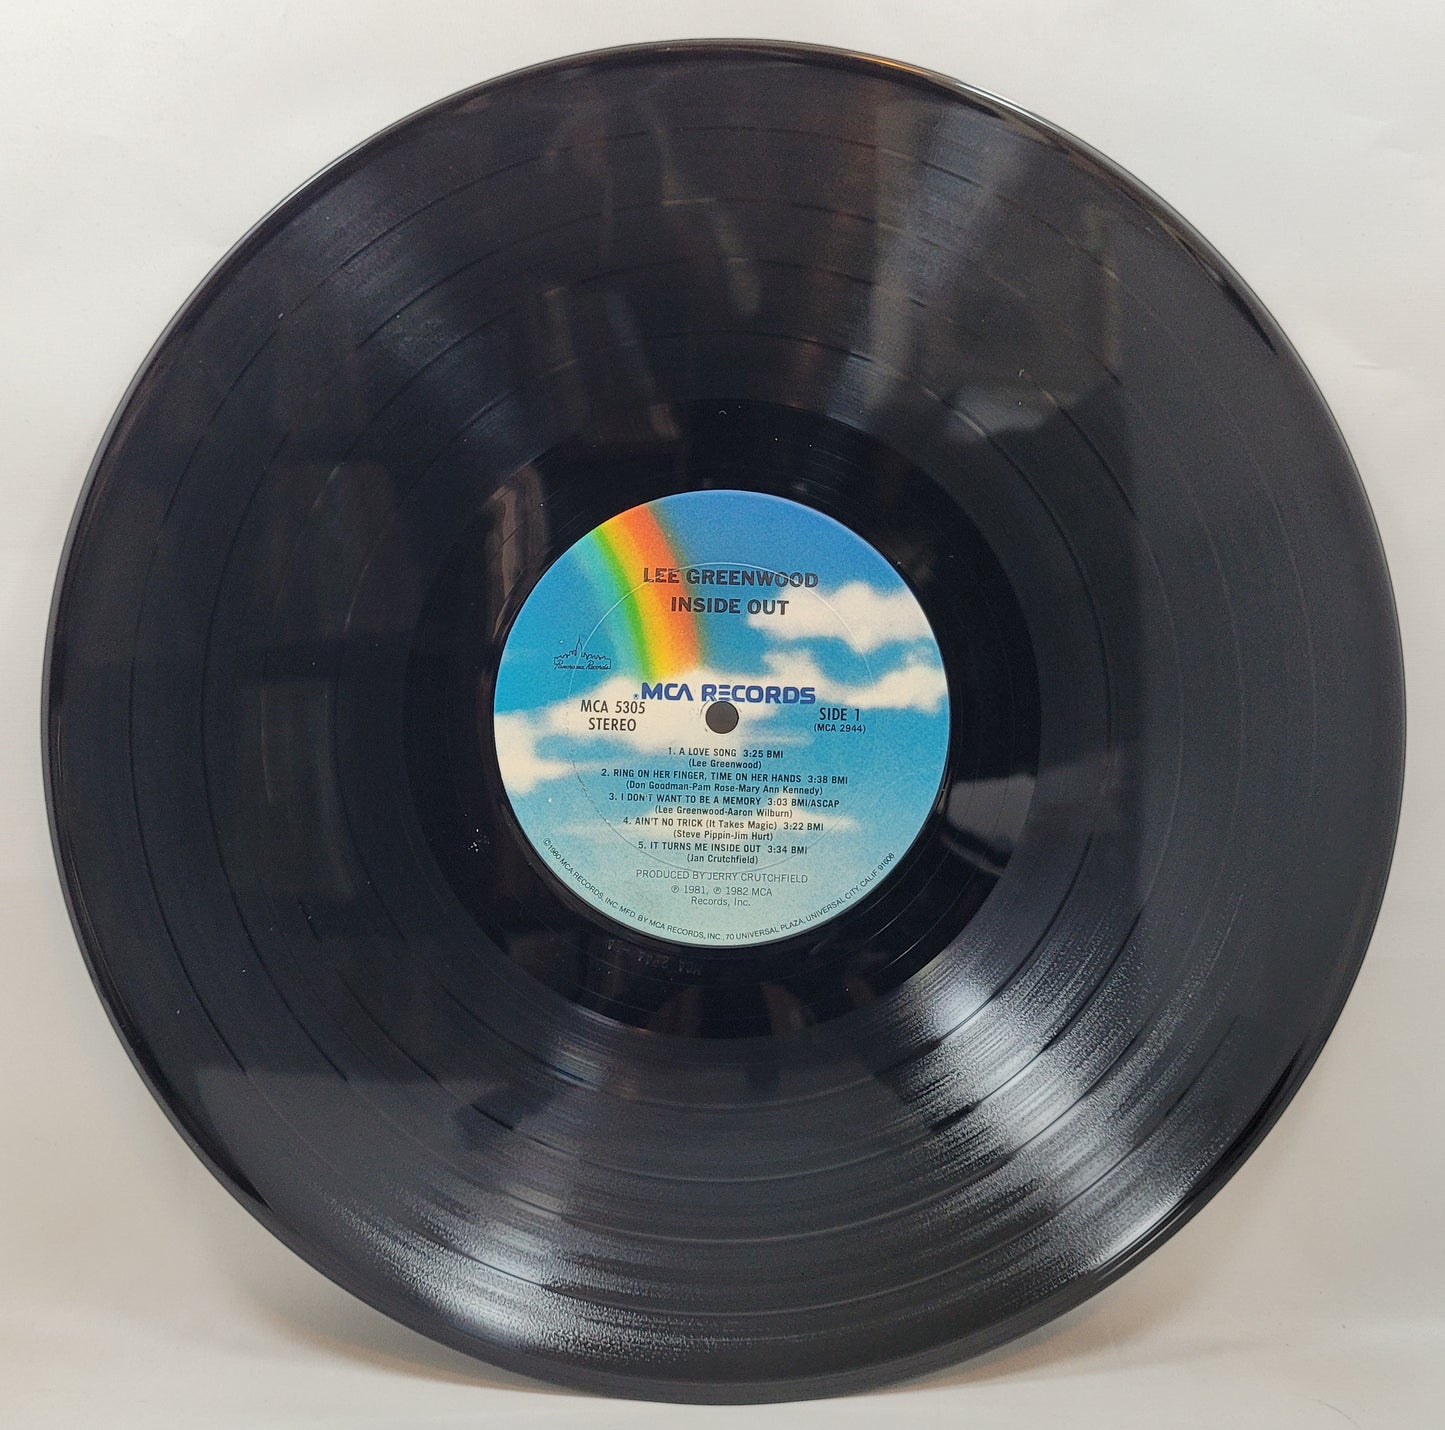 Lee Greenwood - Inside Out [Vinyl Record LP]